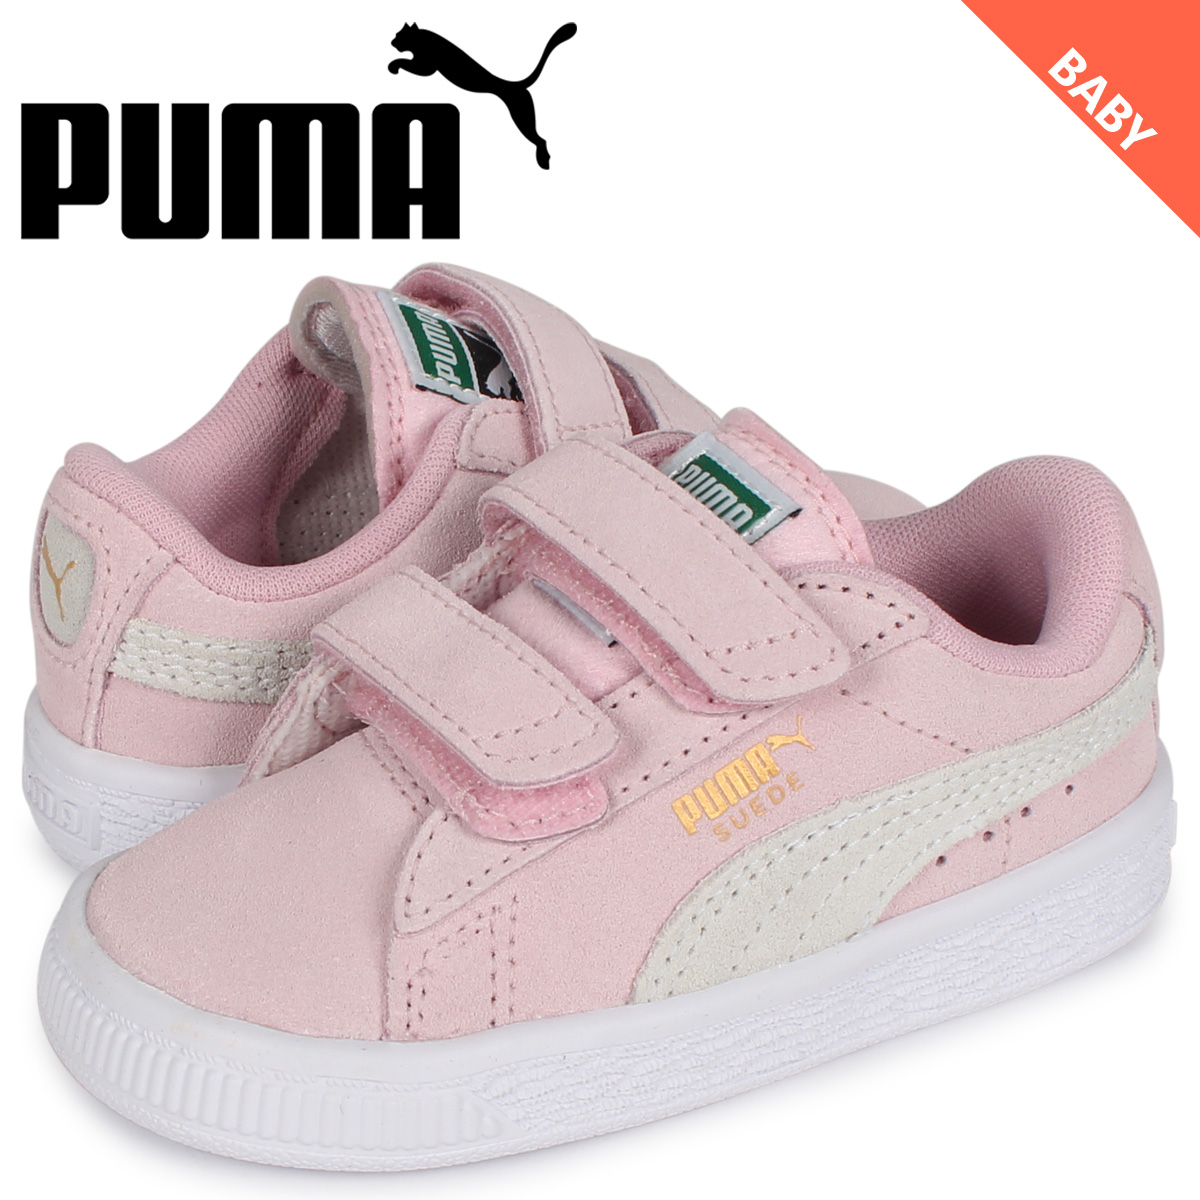 puma suede classic light pink